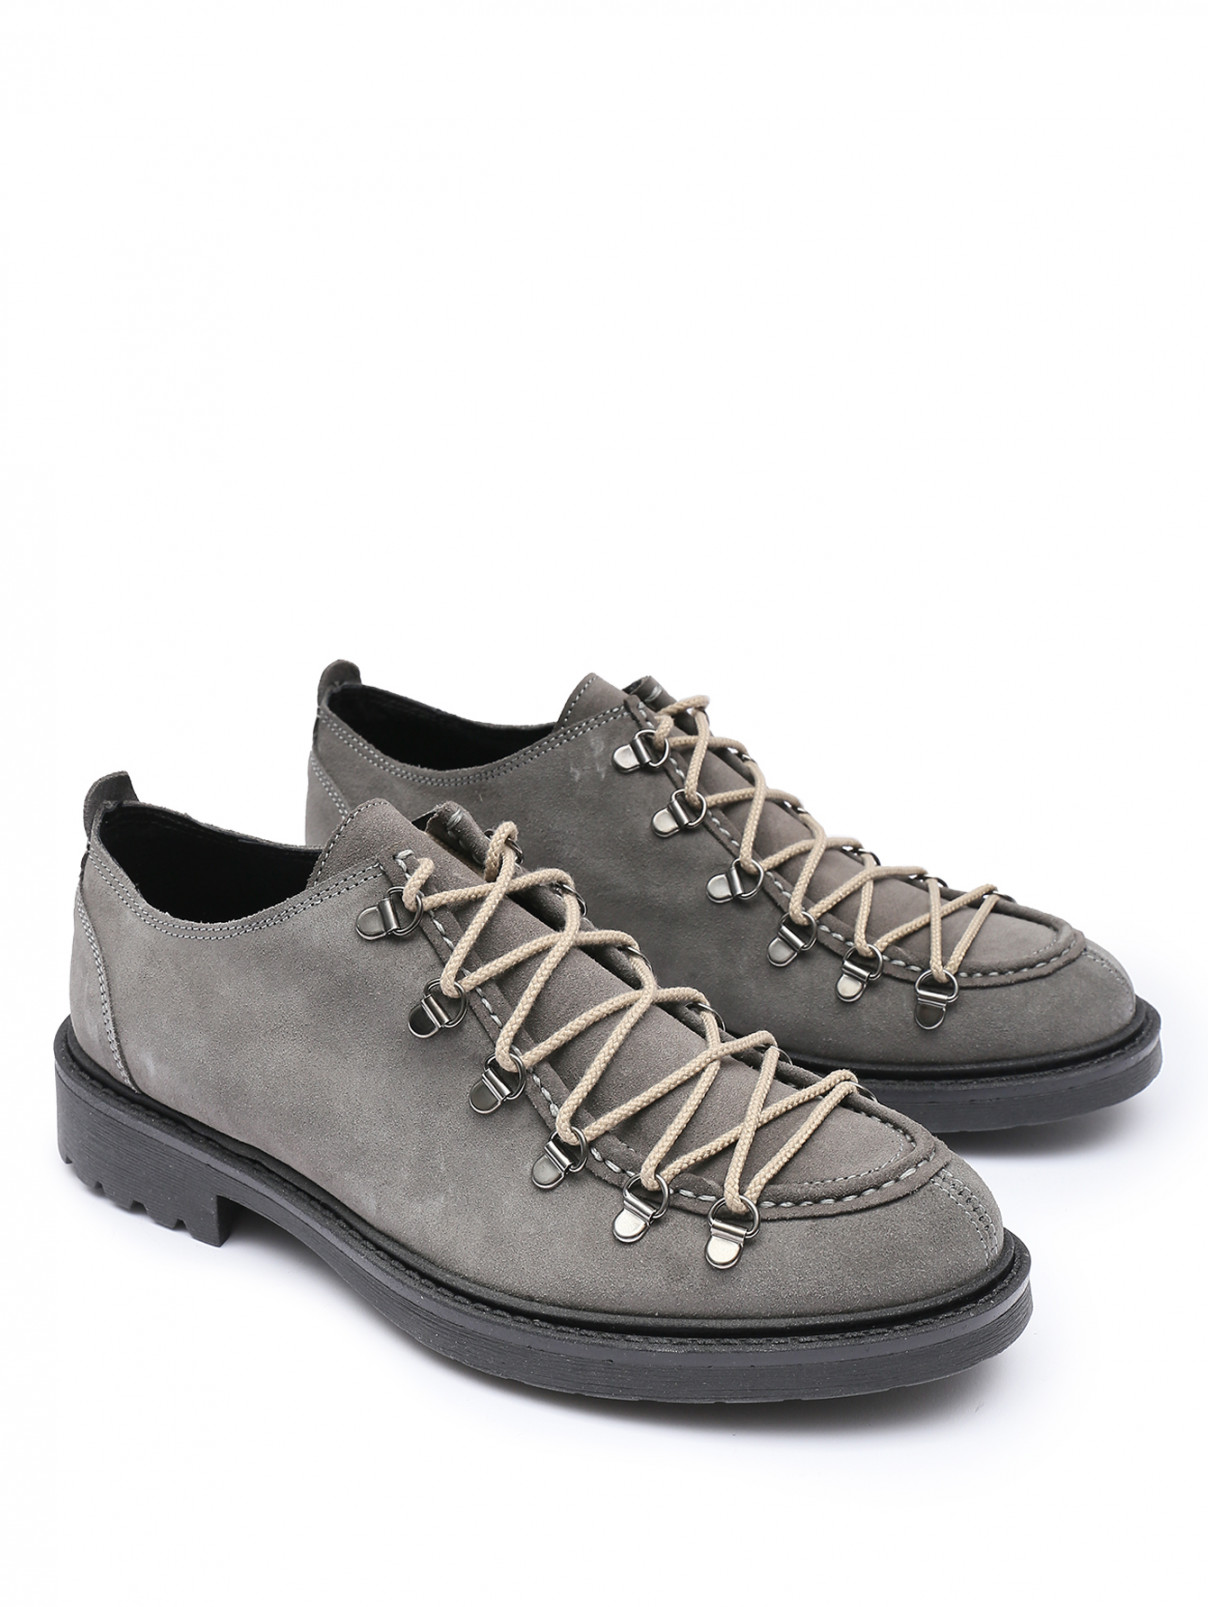 Ботинки со шнуровкой из замши Tombolini  –  Общий вид  – Цвет:  Серый